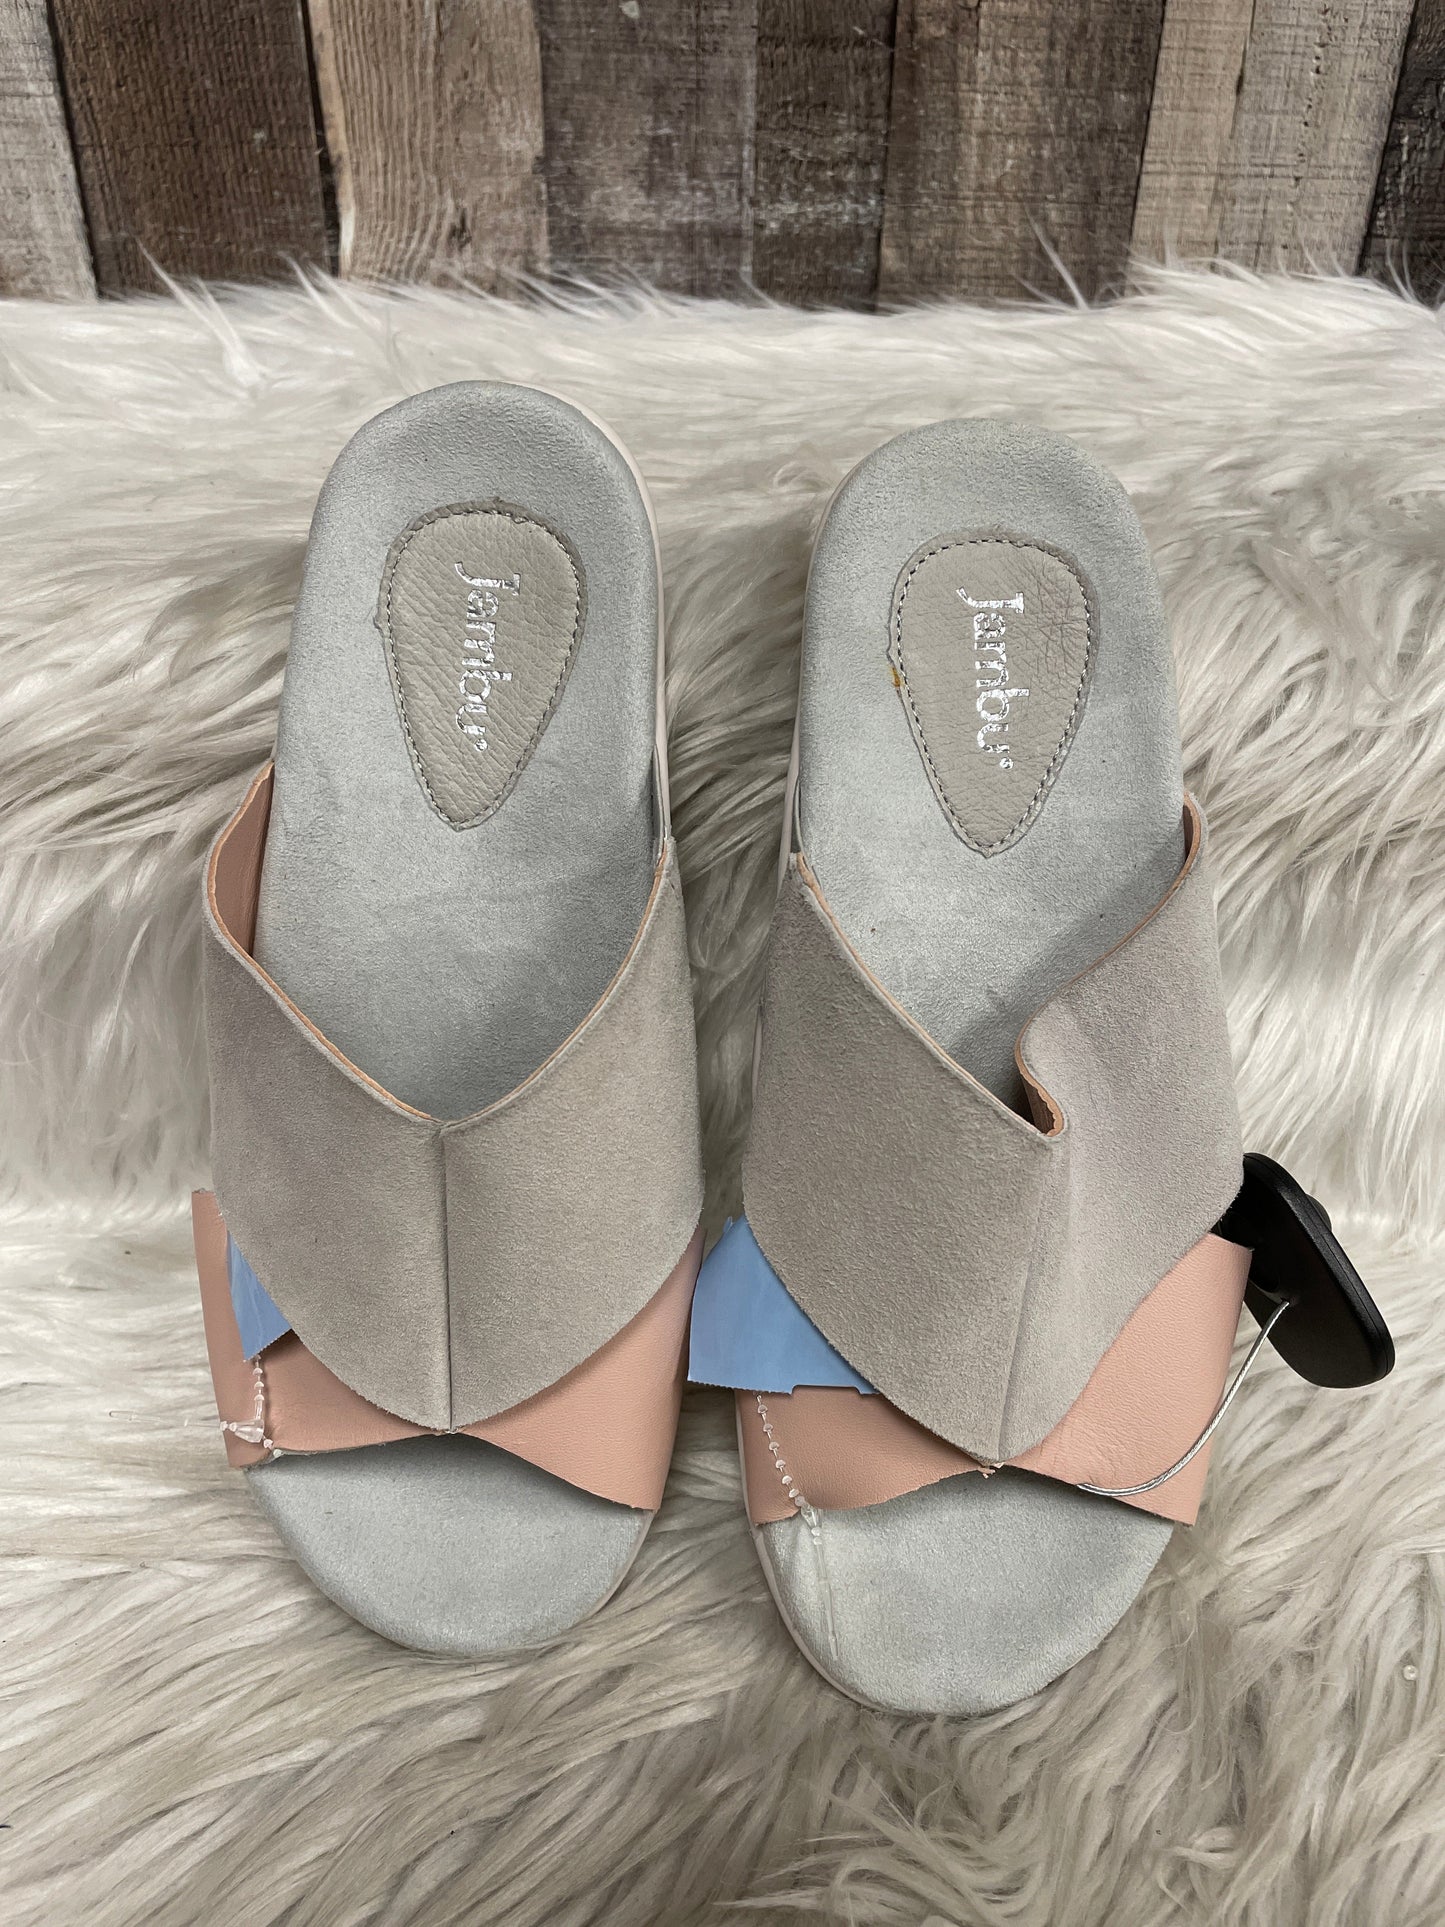 Sandals Flats By Jambu  Size: 7